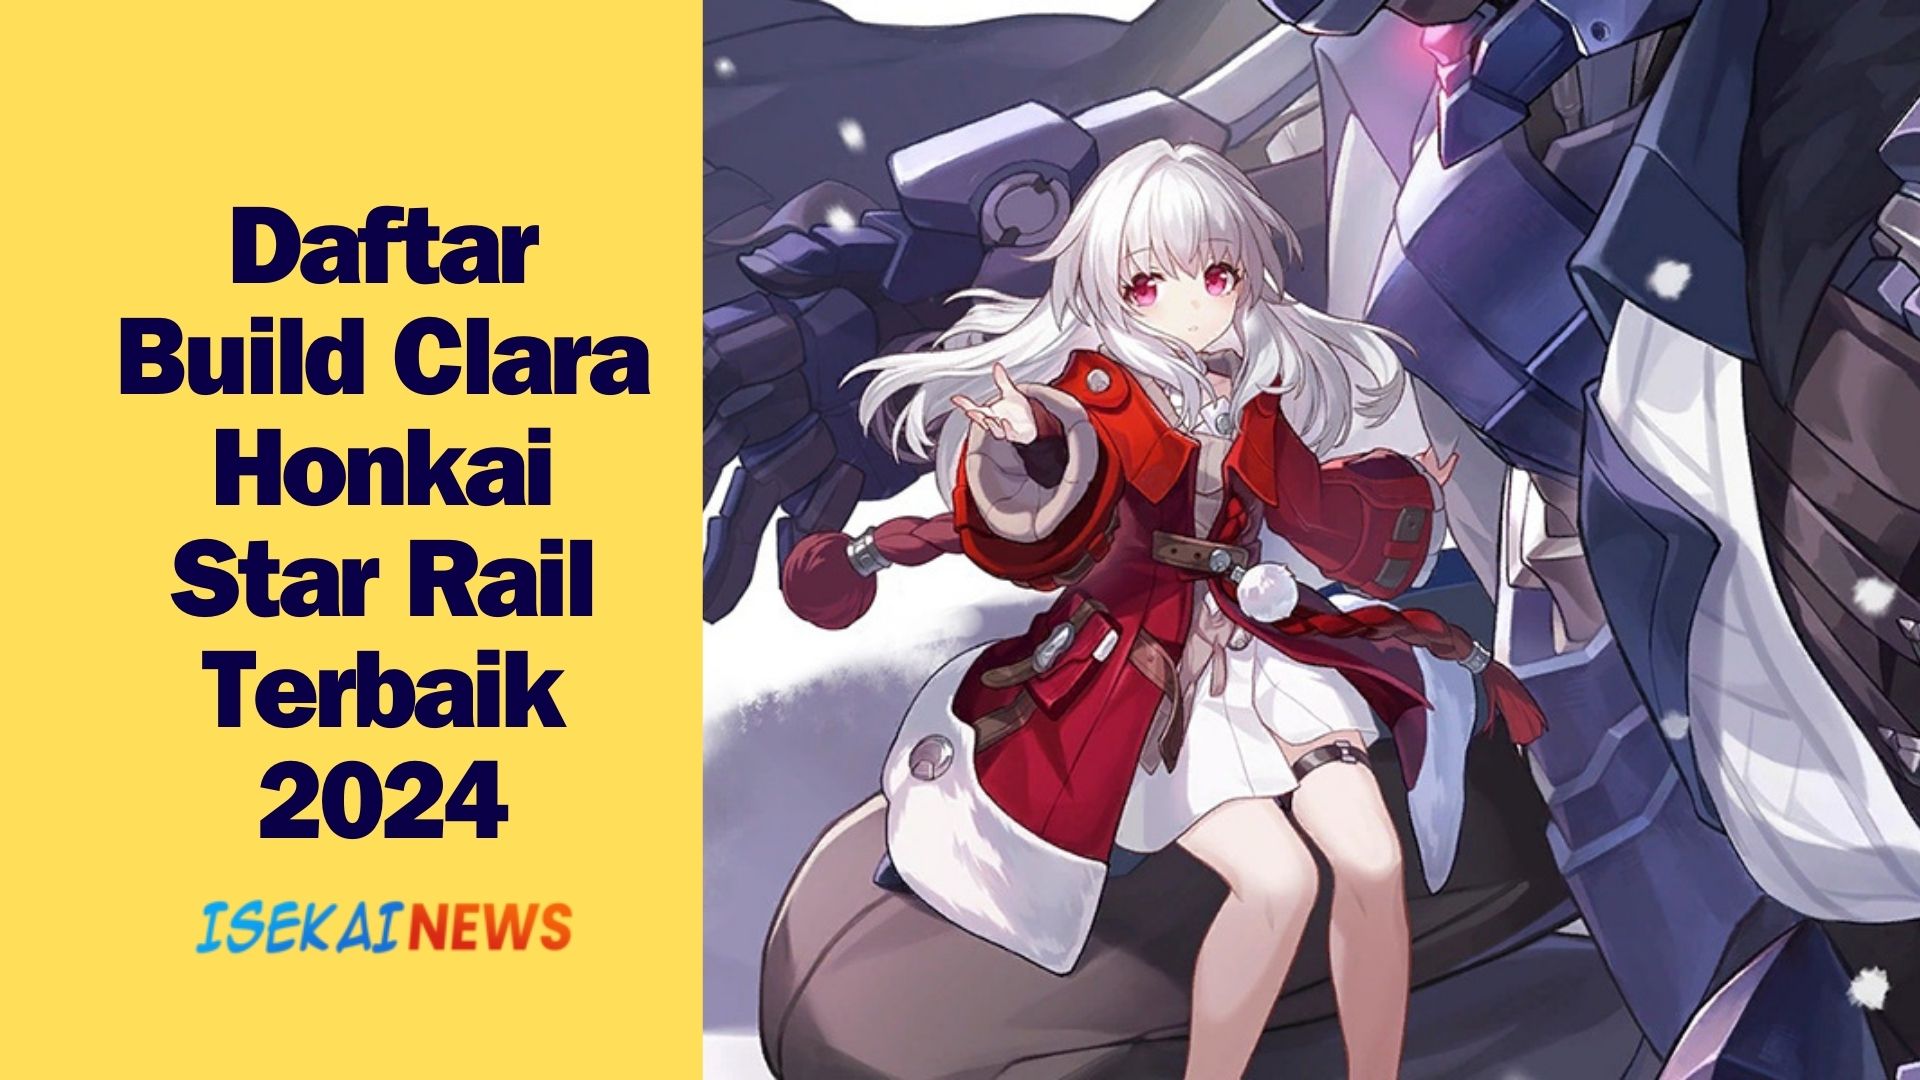 Daftar Build Clara Honkai Star Rail Terbaik 2024